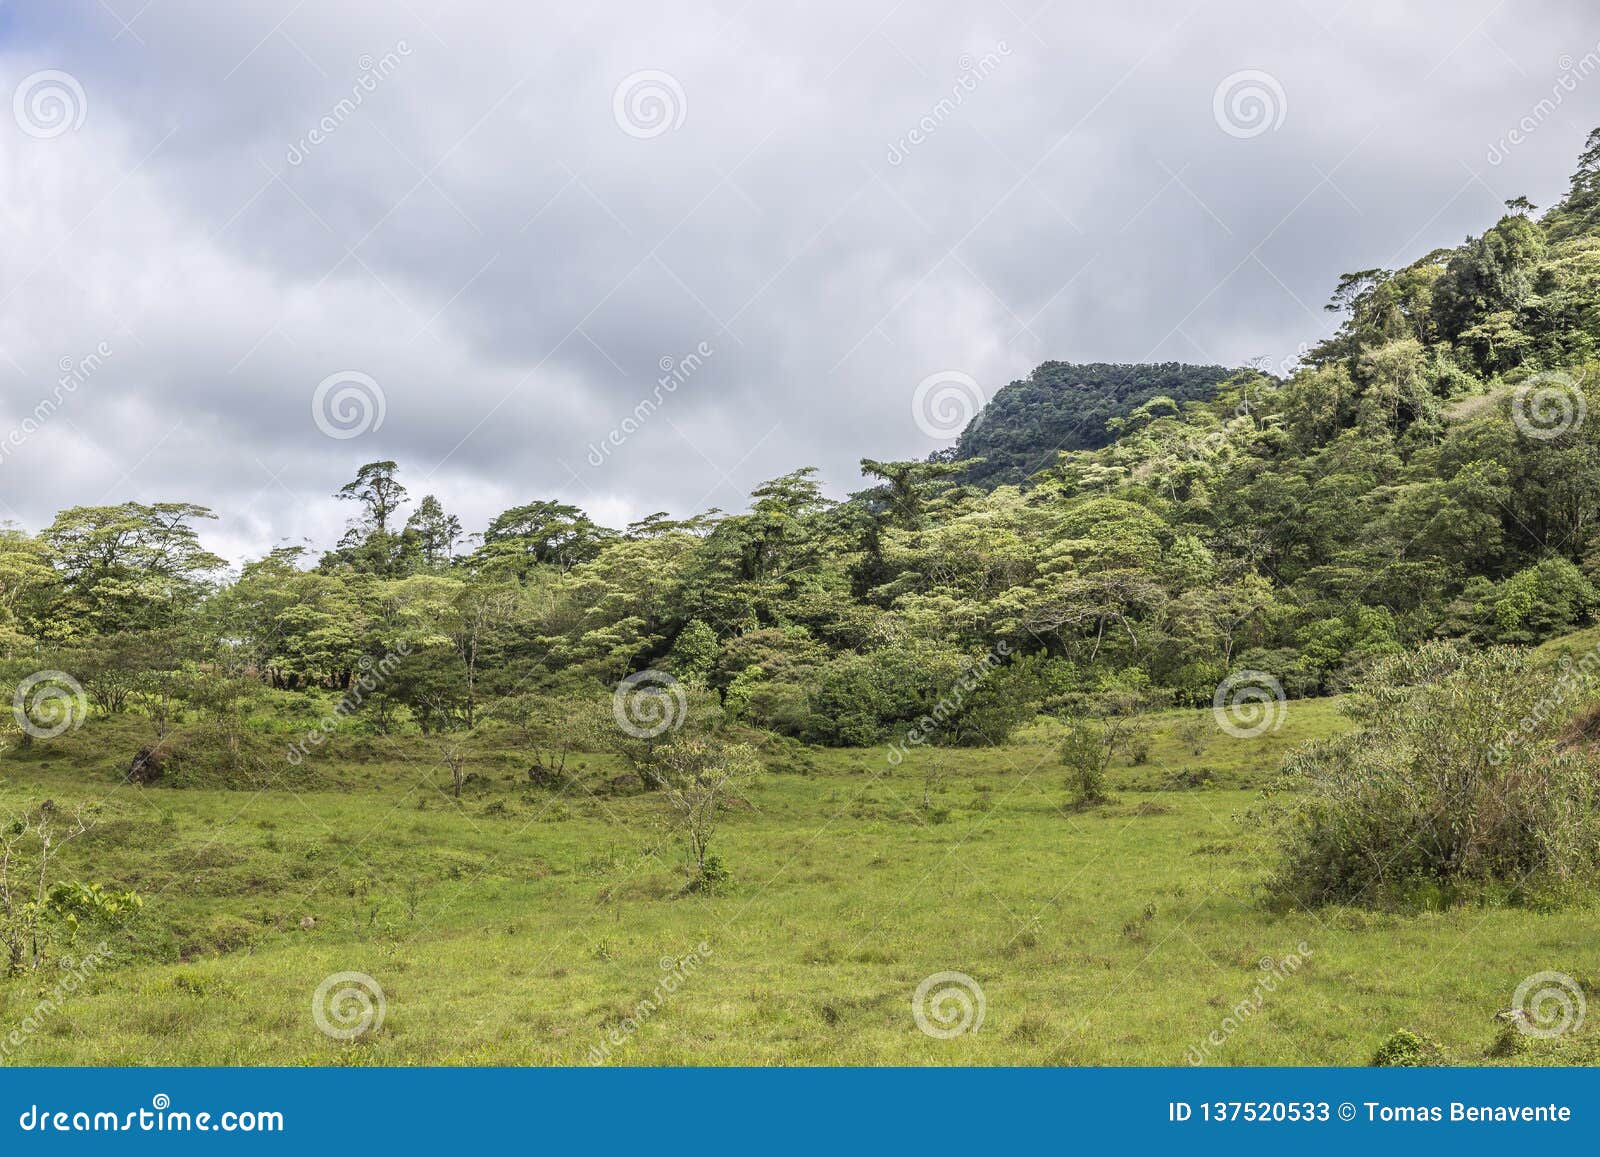 green praire at the peÃÂ±as blancas massif natural reserve, nicaragua